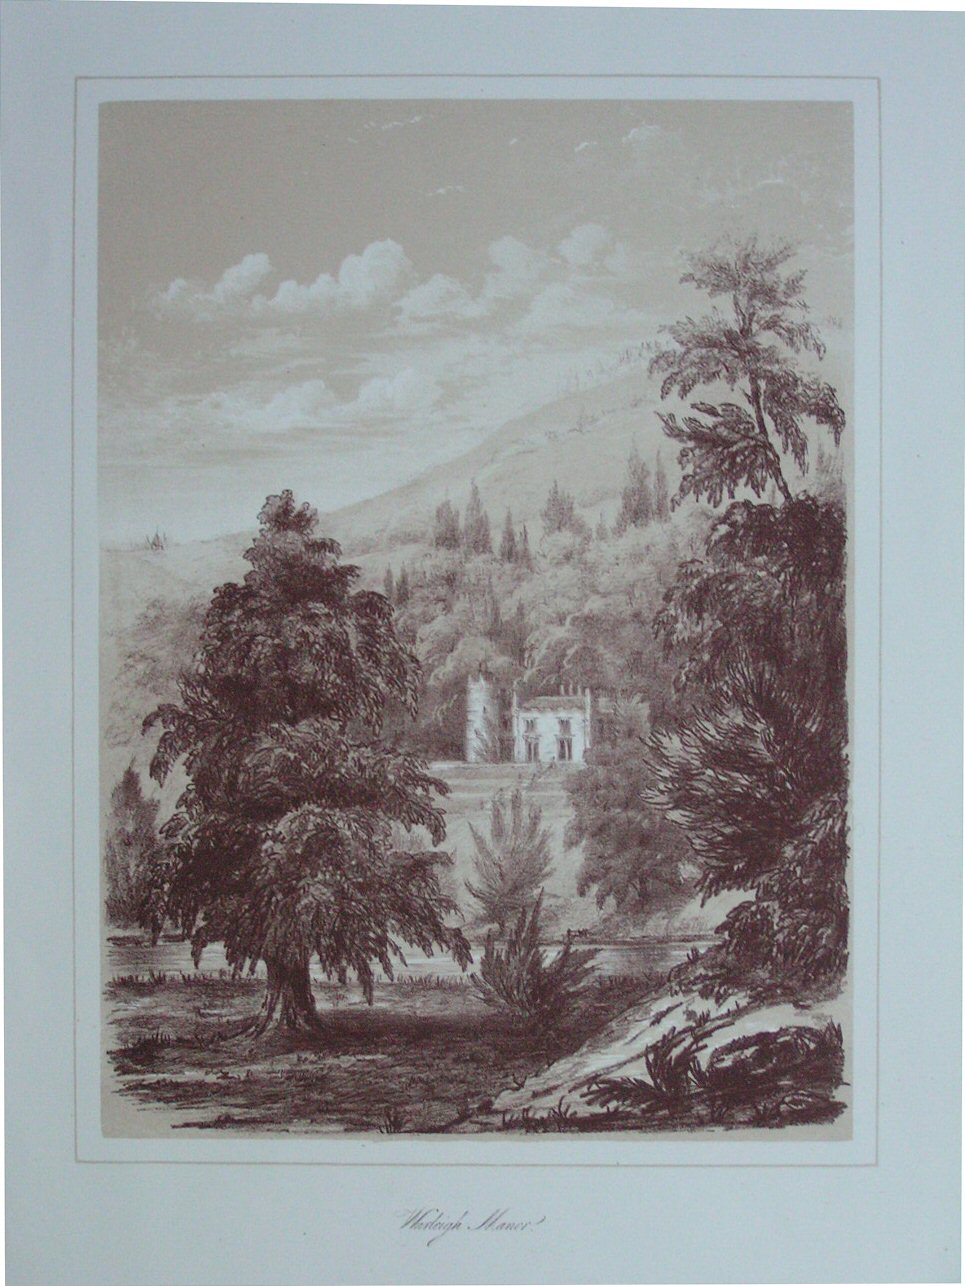 Lithograph - Warleigh Manor